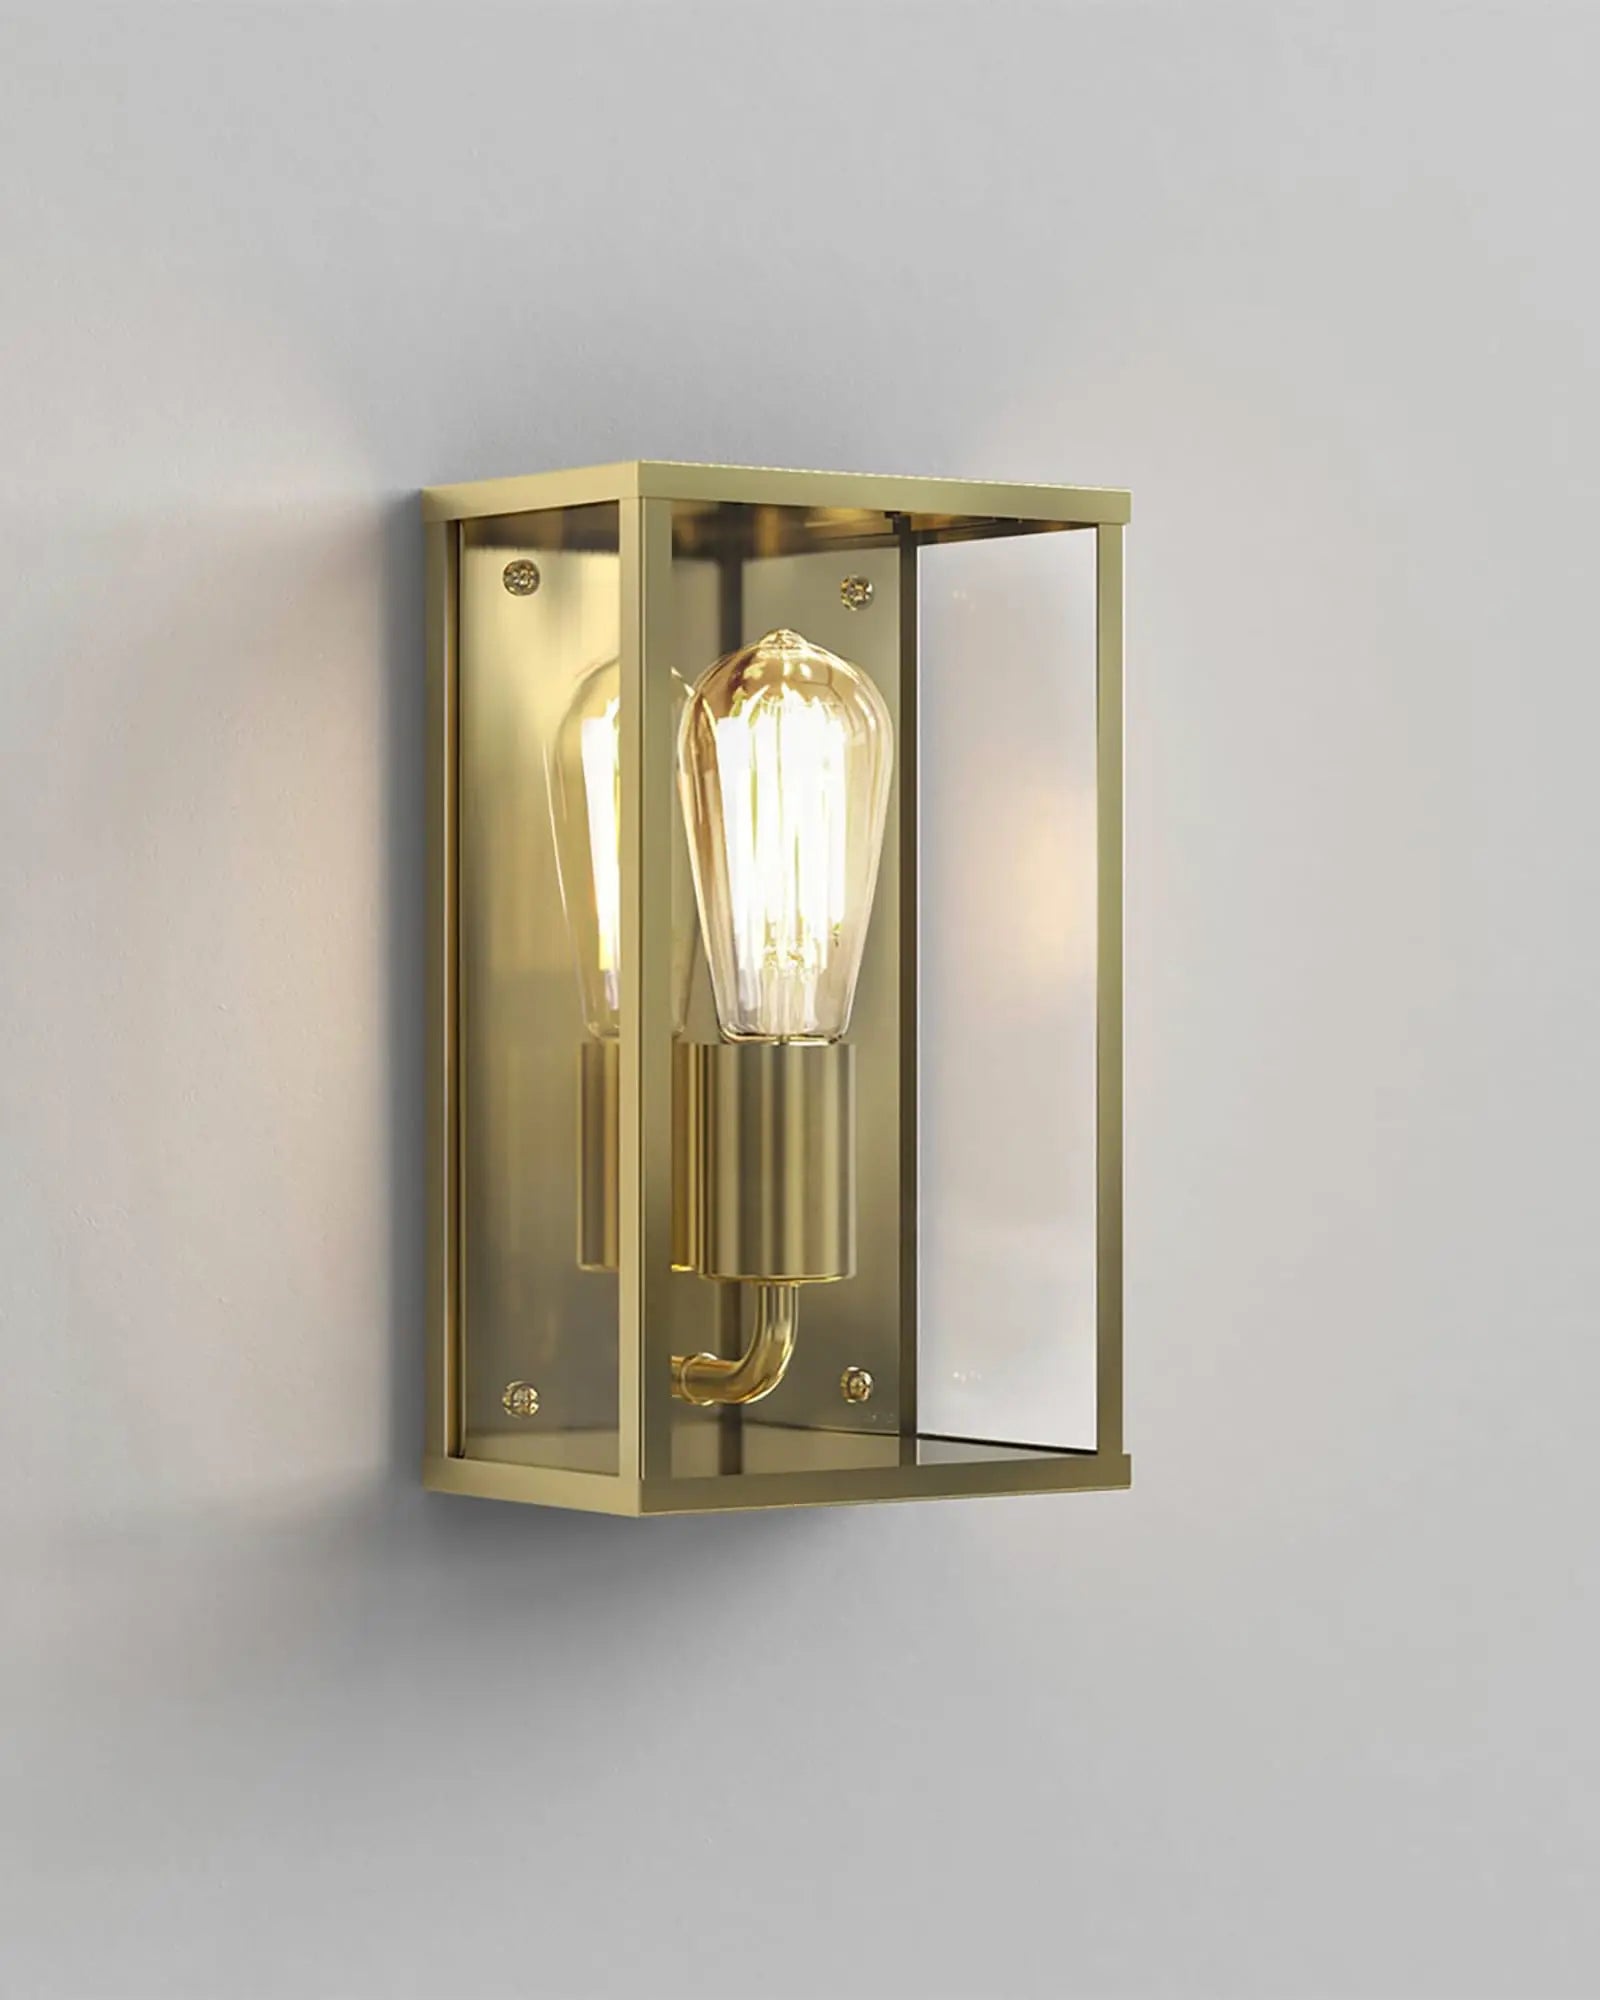 Homefield contemporary lantern style outdoor wall light brass 165